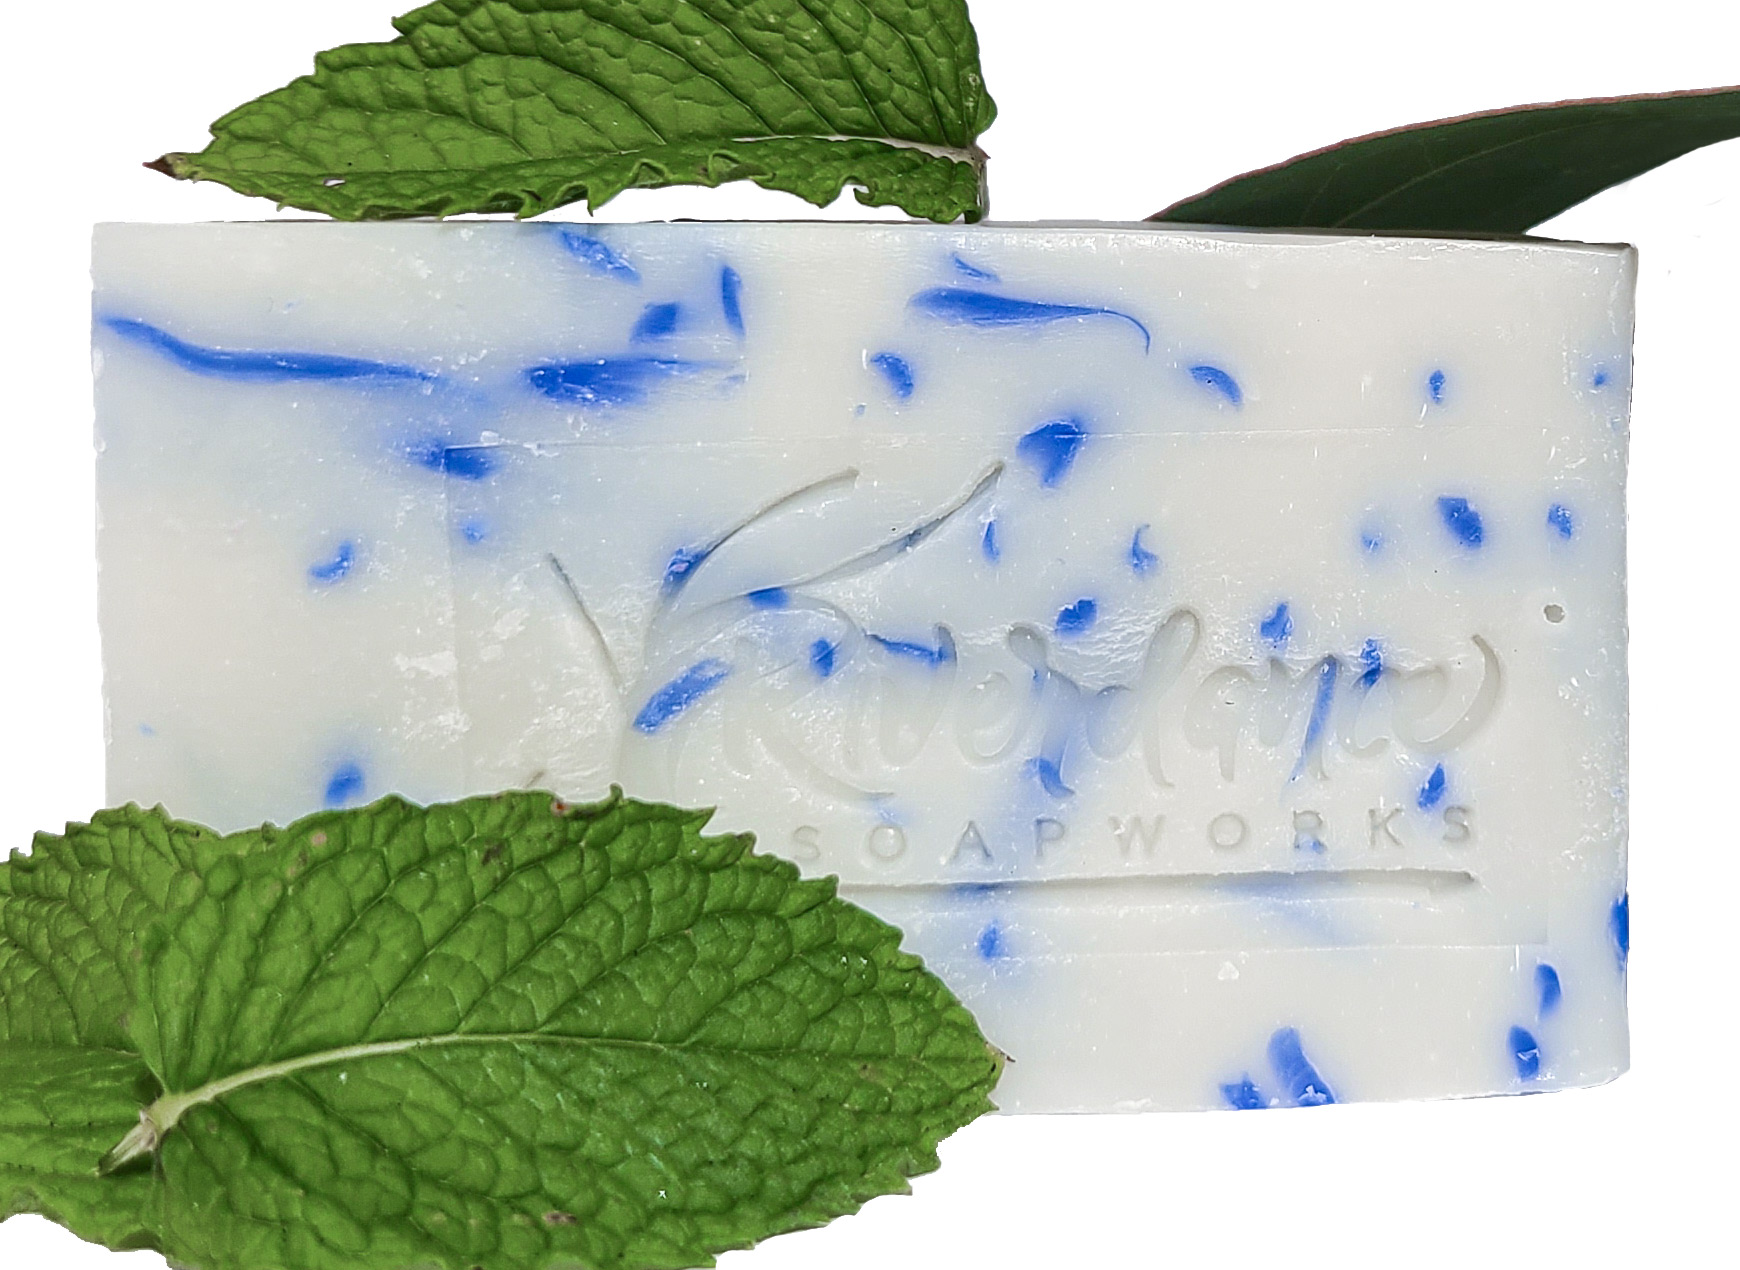 breathe body soap product image